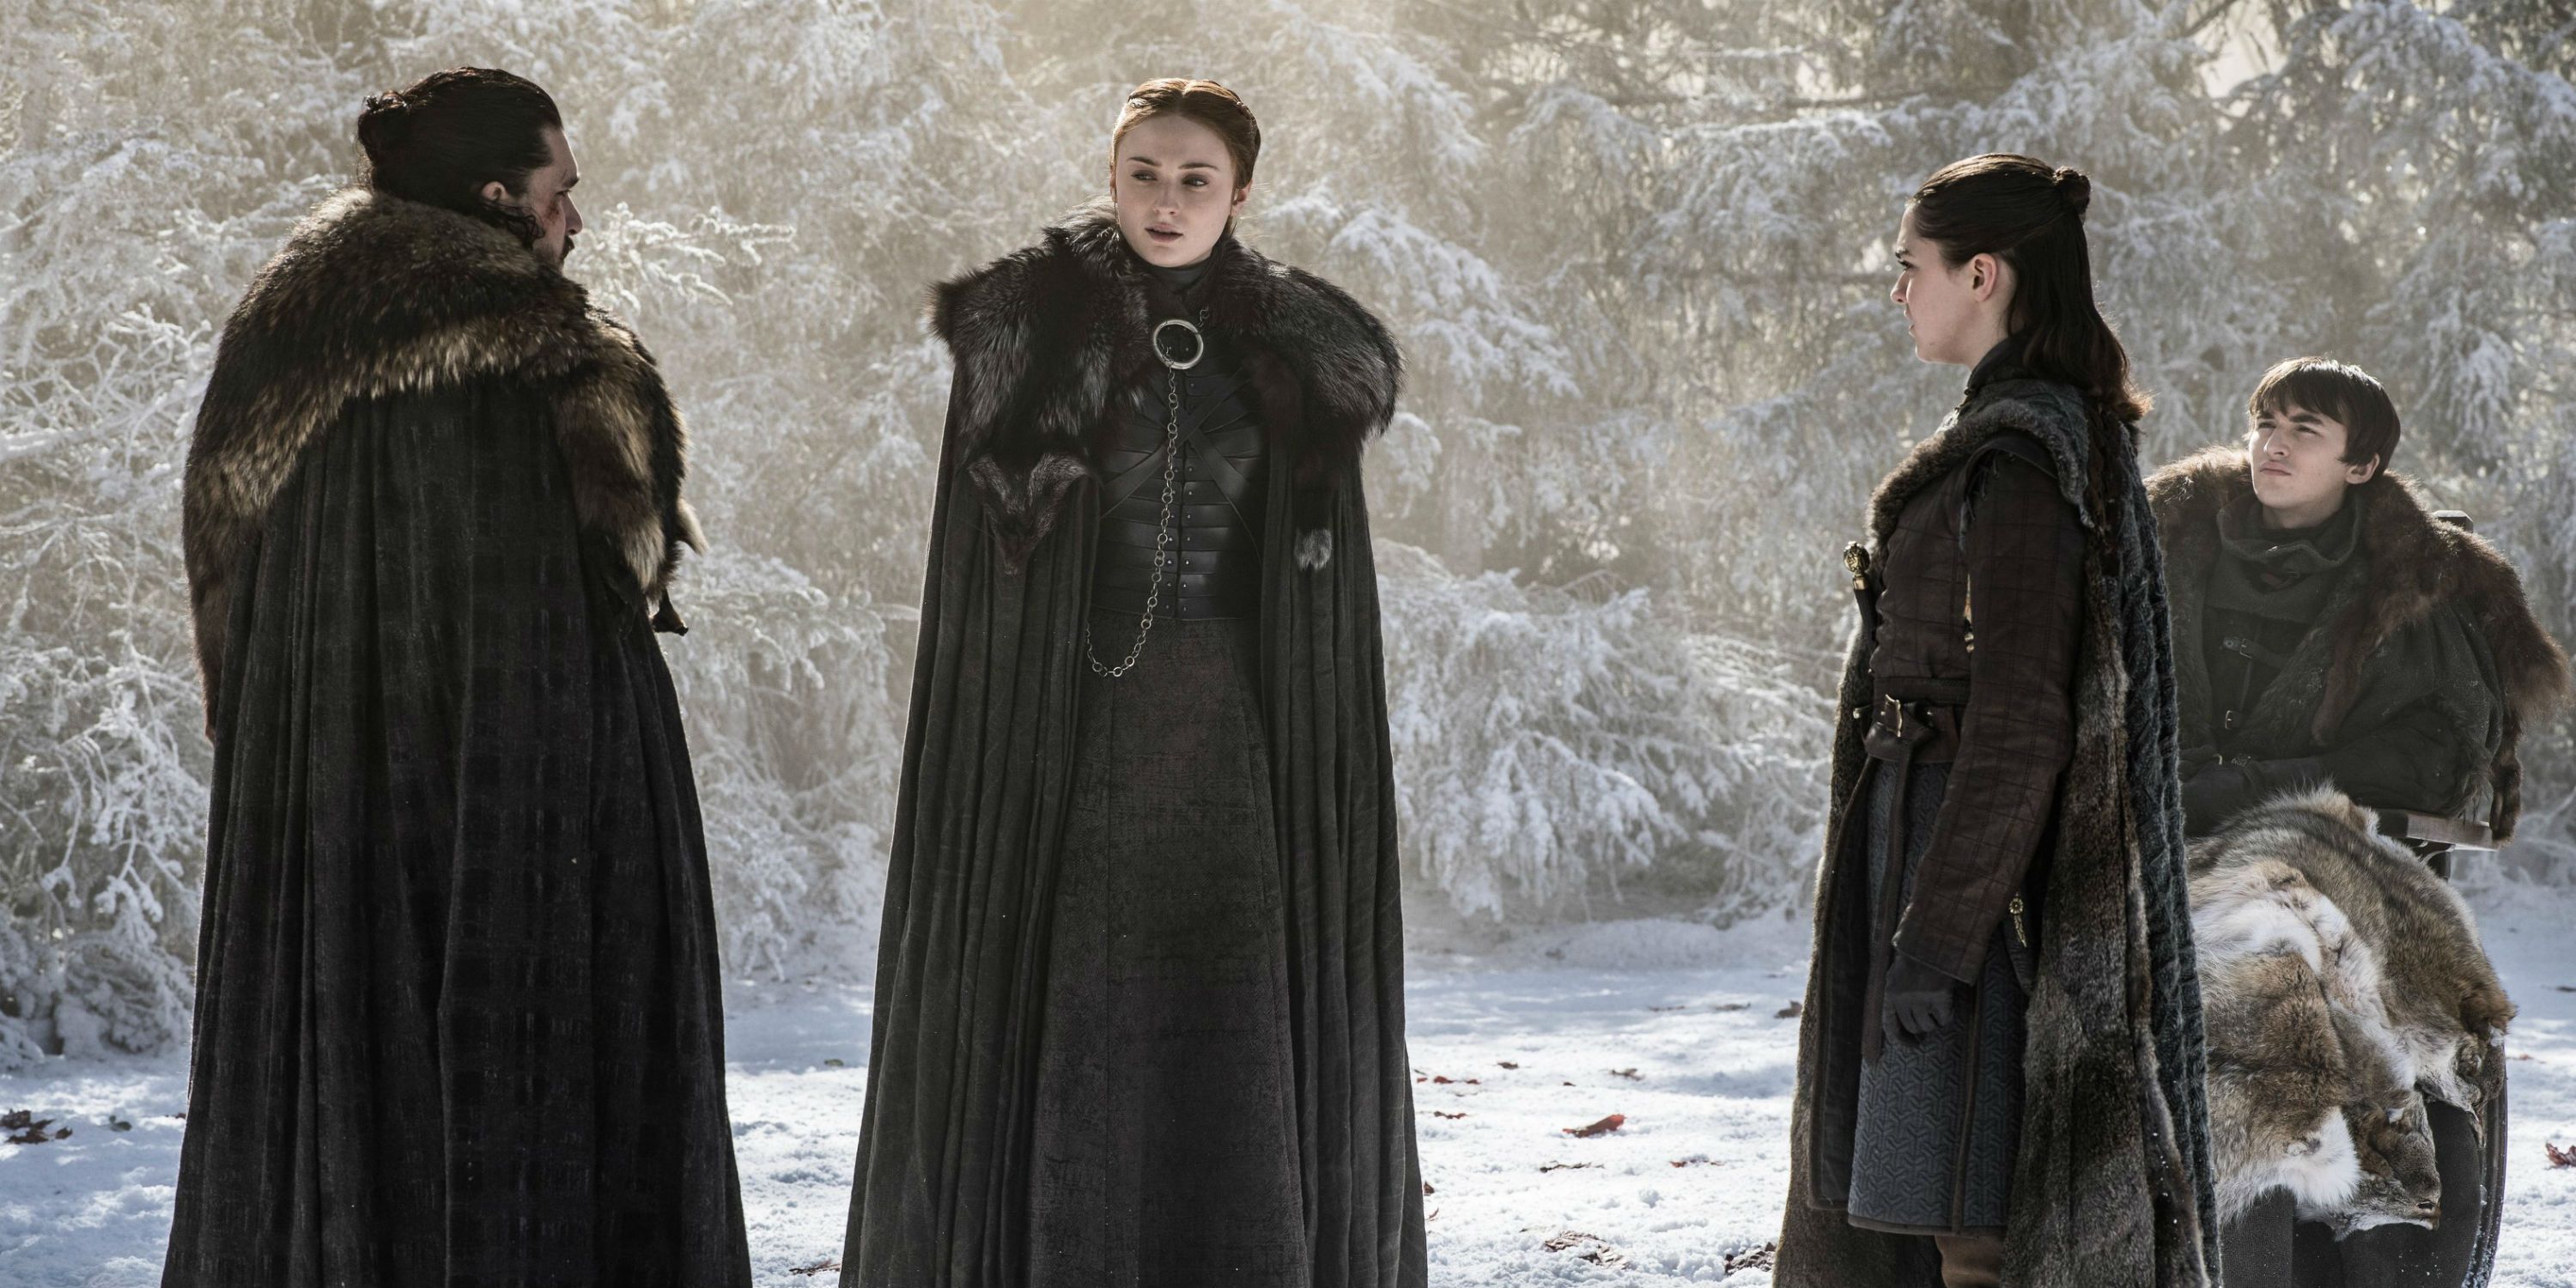 Jon Sansa Arya Bran in godswood on Game of Thrones season 8